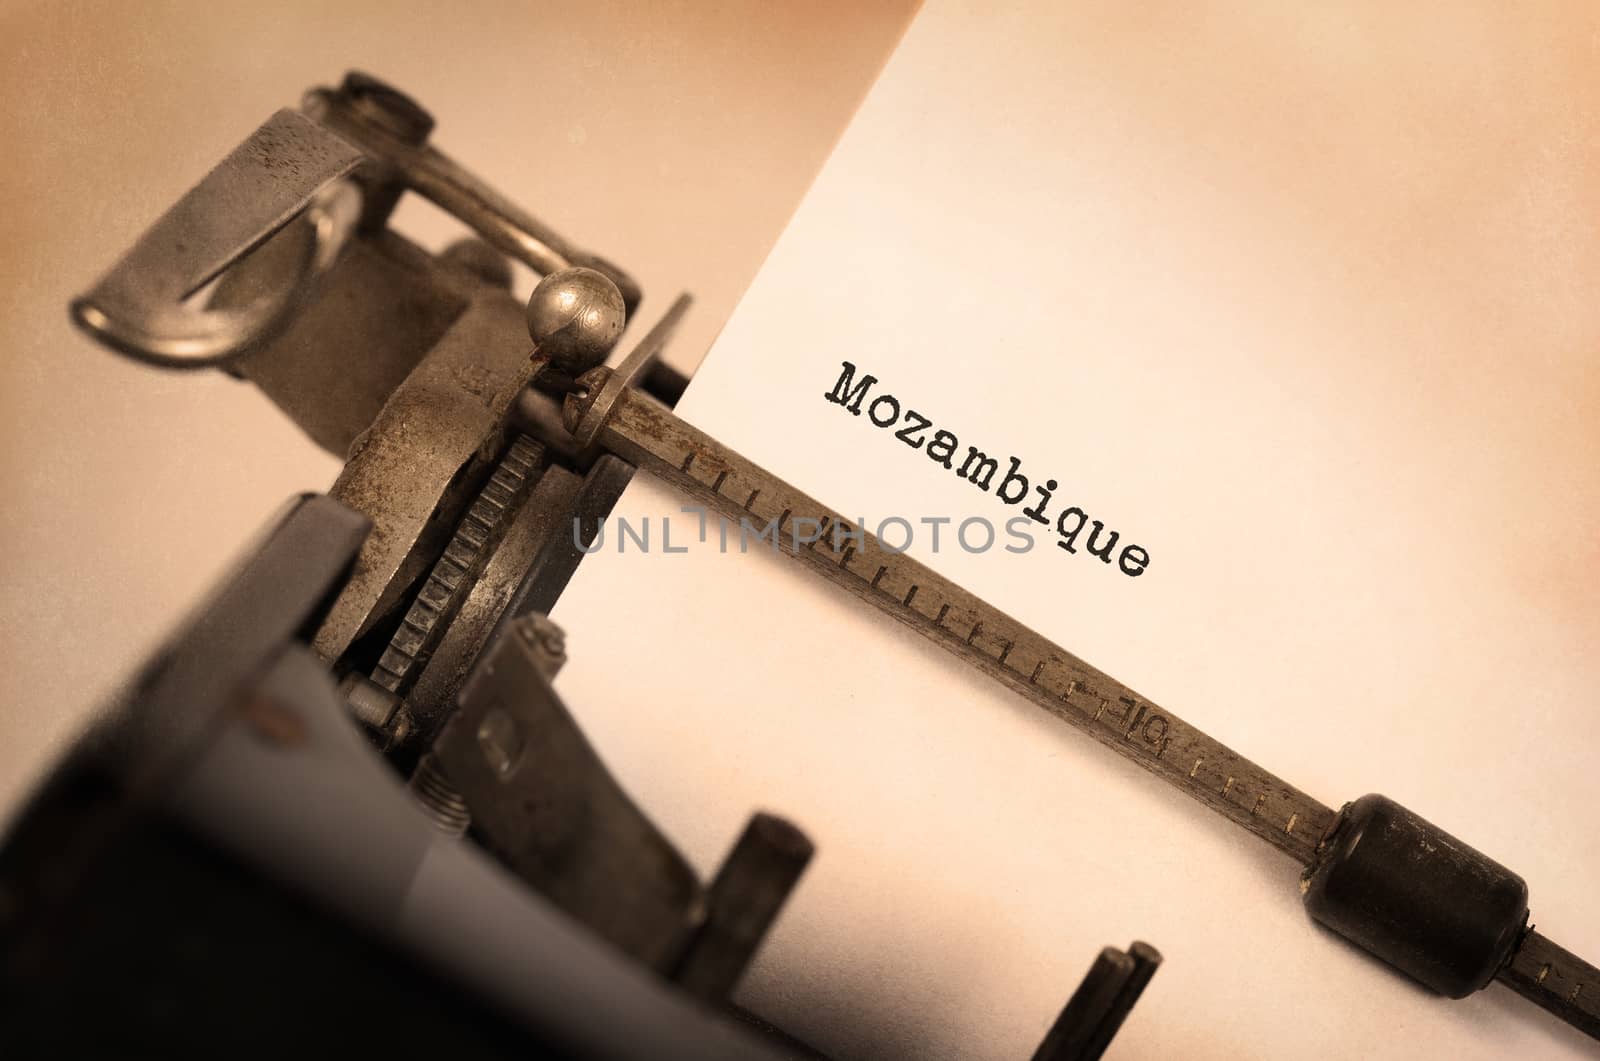 Old typewriter - Mozambique by michaklootwijk